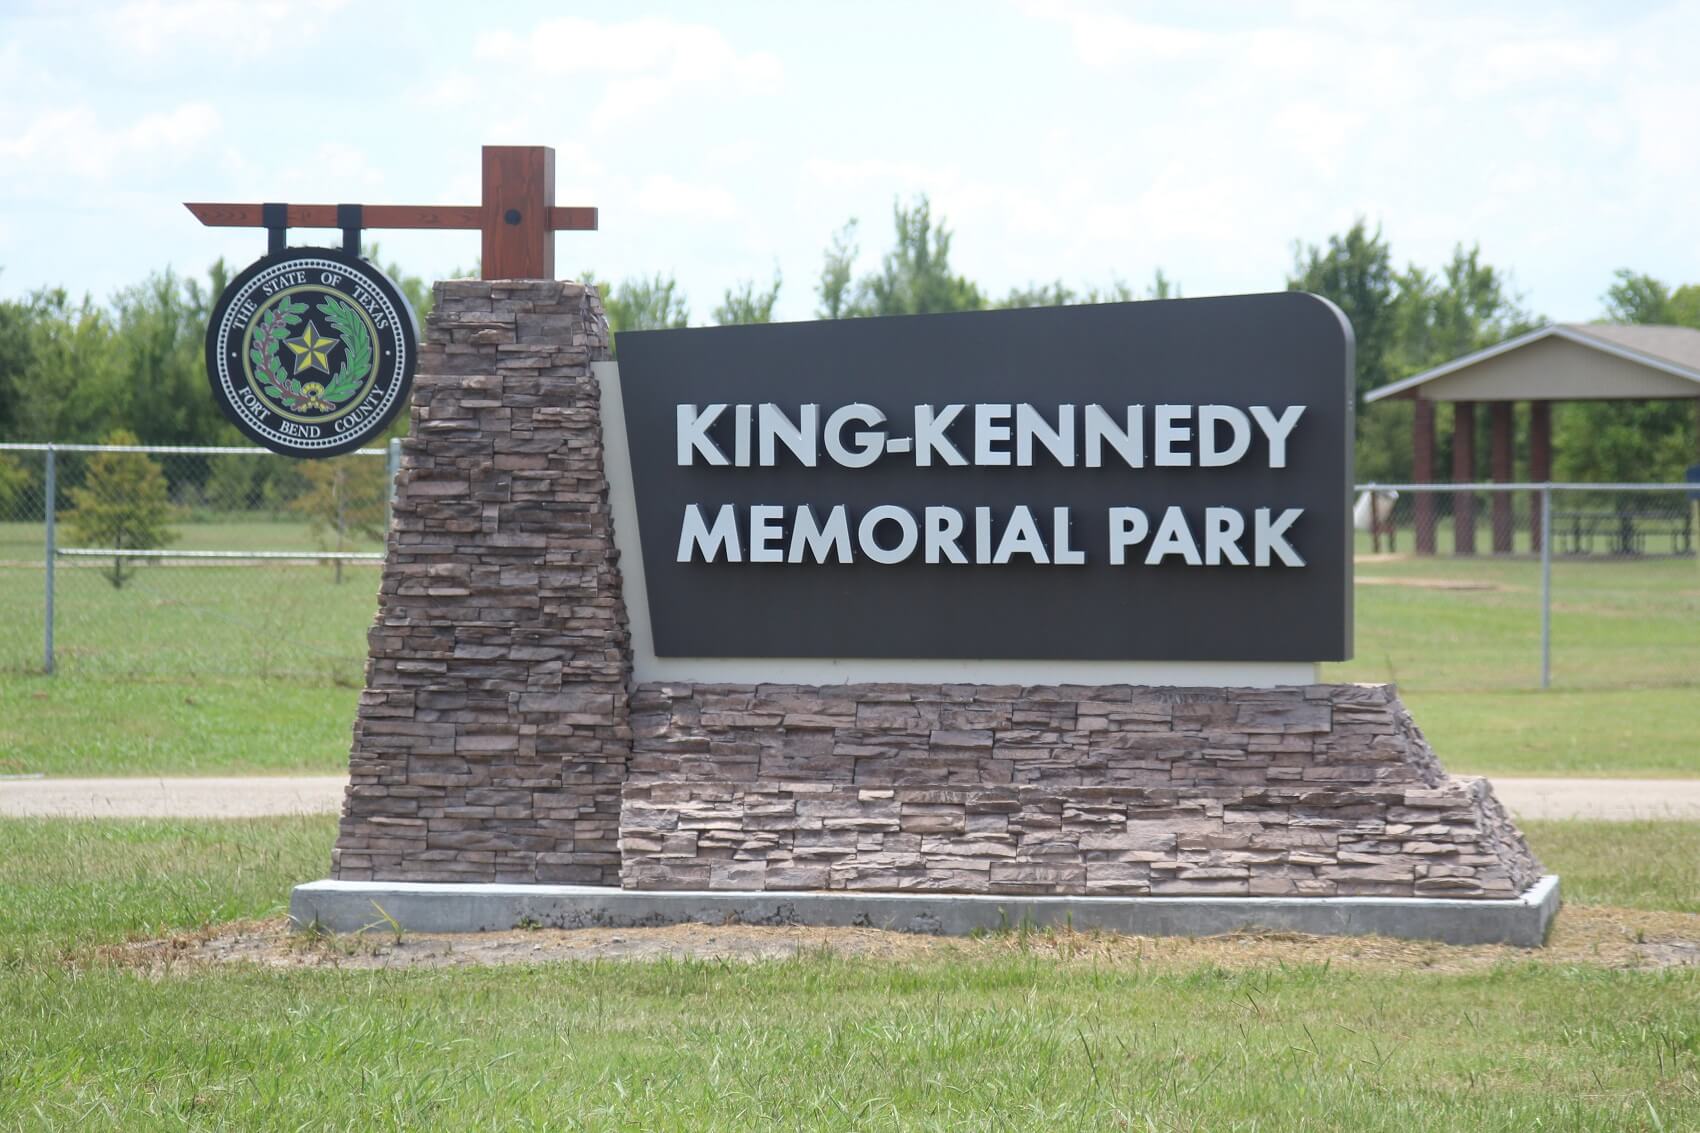 King-Kennedy Memorial Park in Kendleton